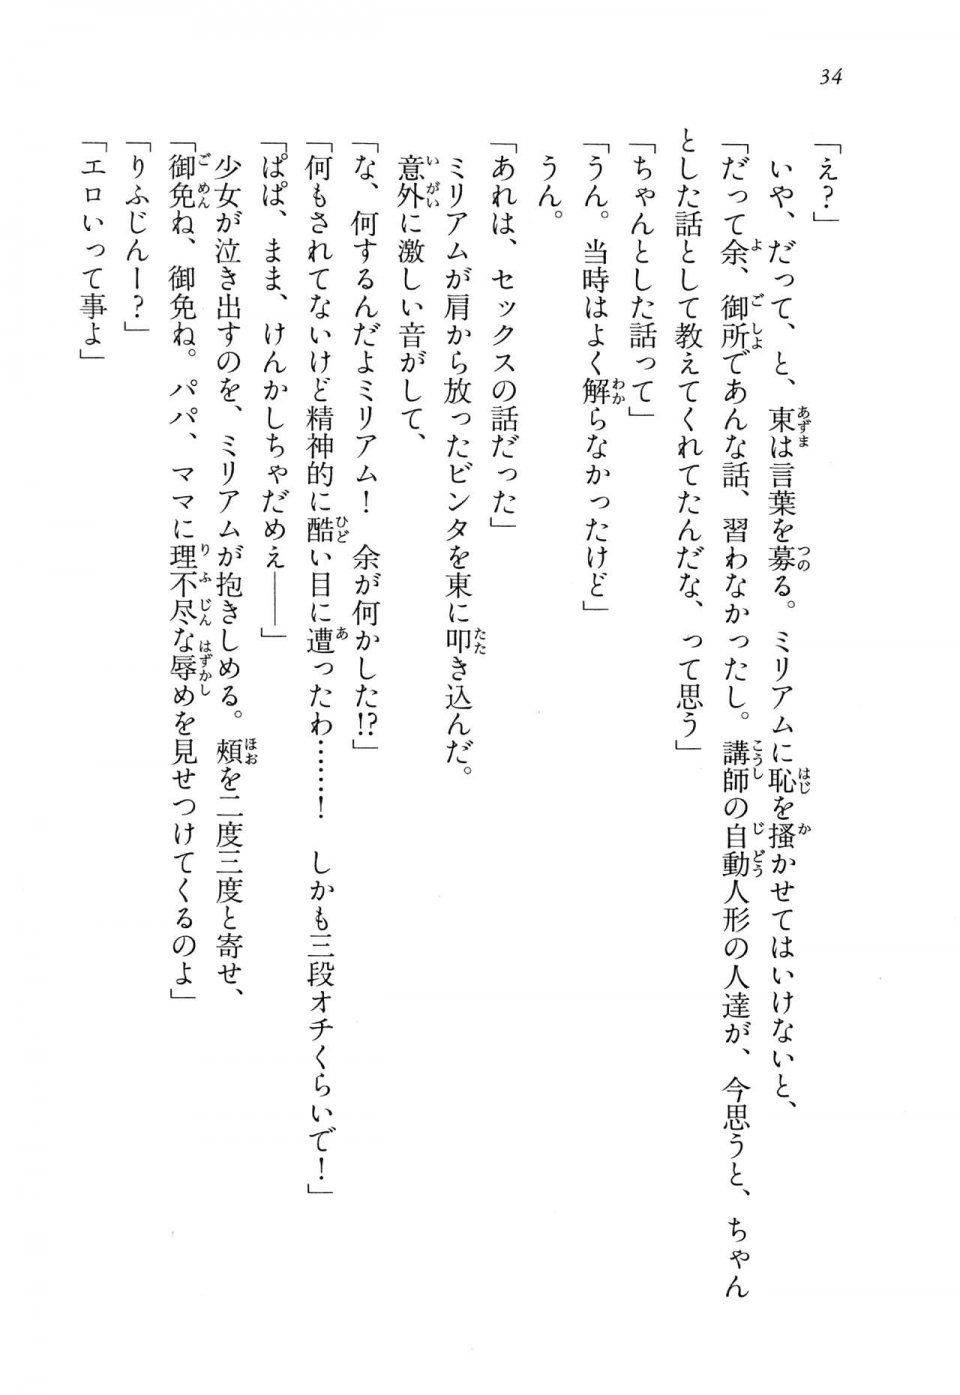 Kyoukai Senjou no Horizon LN Vol 15(6C) Part 1 - Photo #34